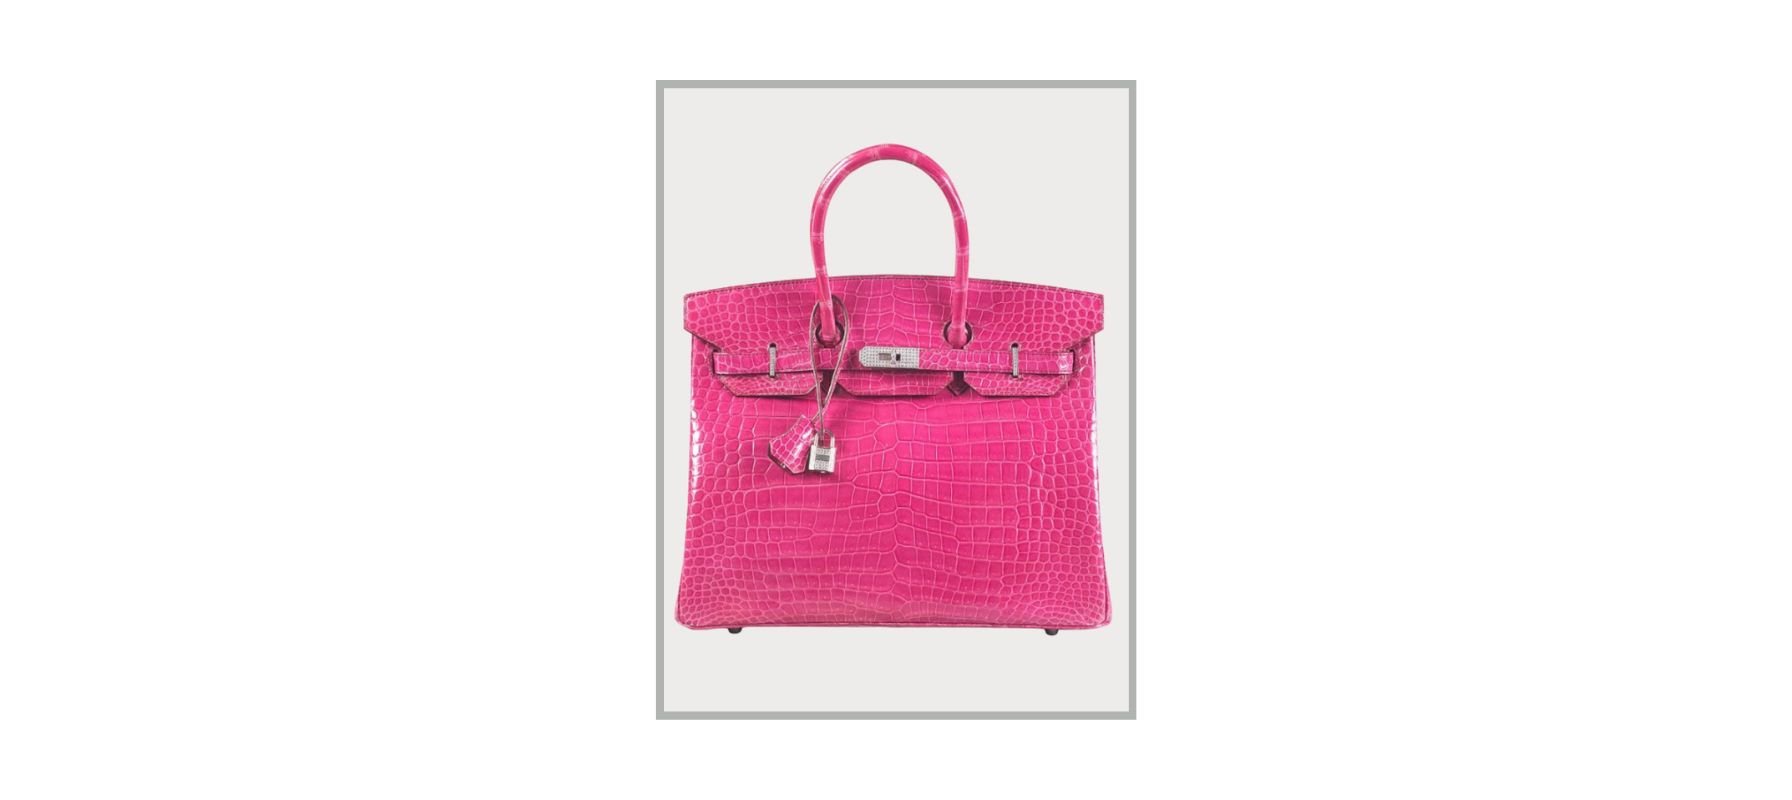 Buy Handbags Online | Purses and Handbags | Gorjus London